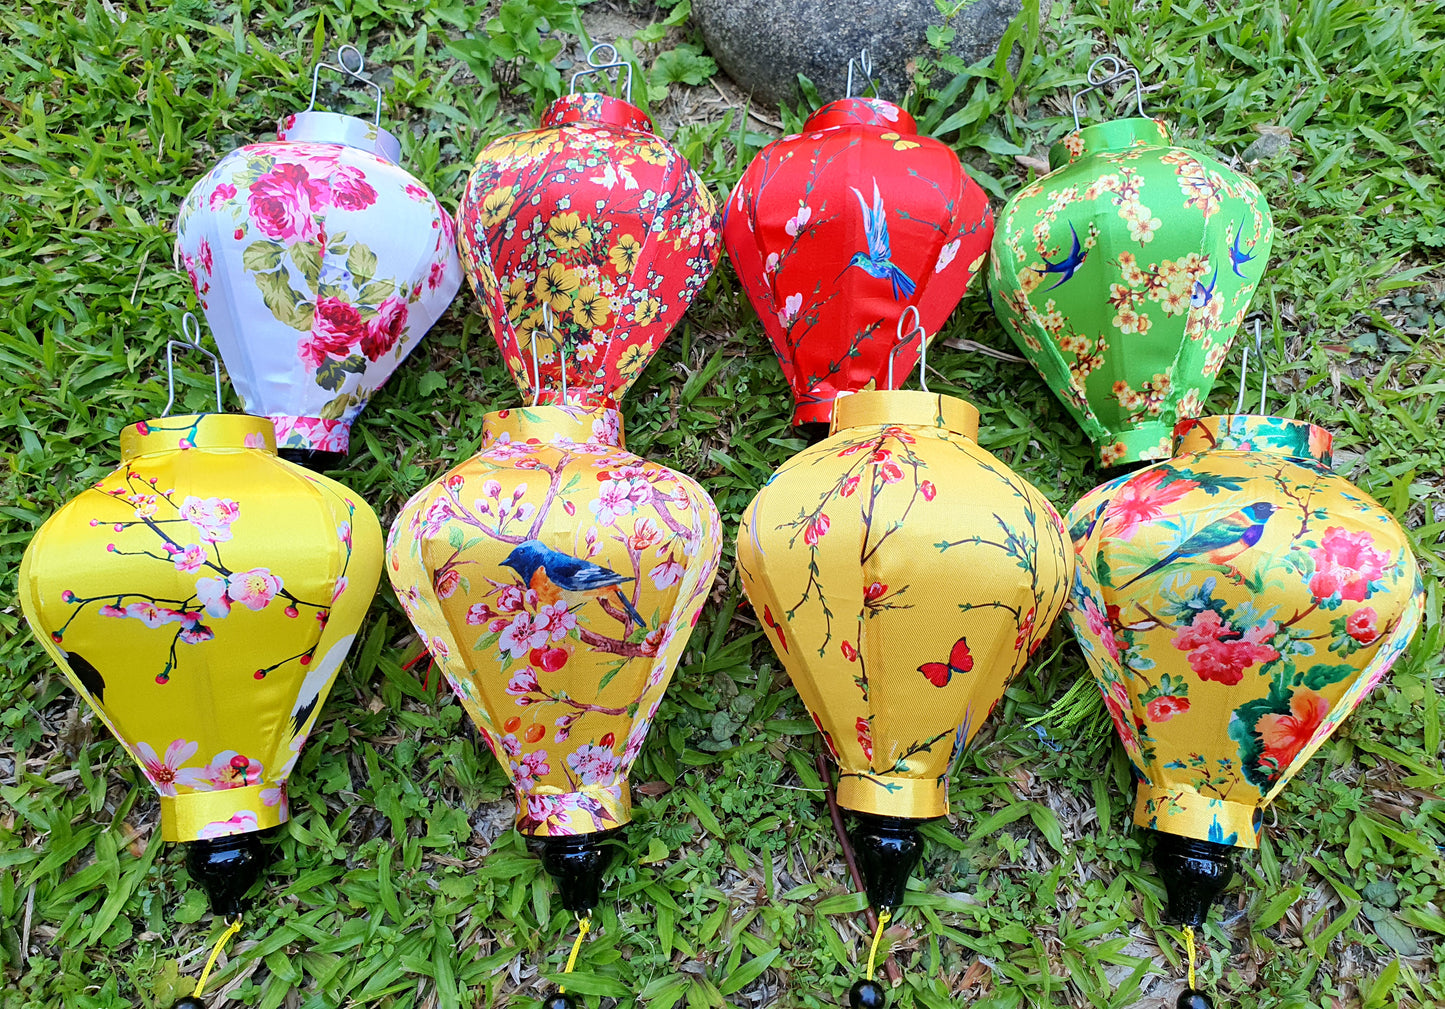 Set of 8 Hoi An bamboo silk lanterns 22cm - Mix shape and color - Personalization - Patio decoration - Wedding lanterns - Garden lanterns